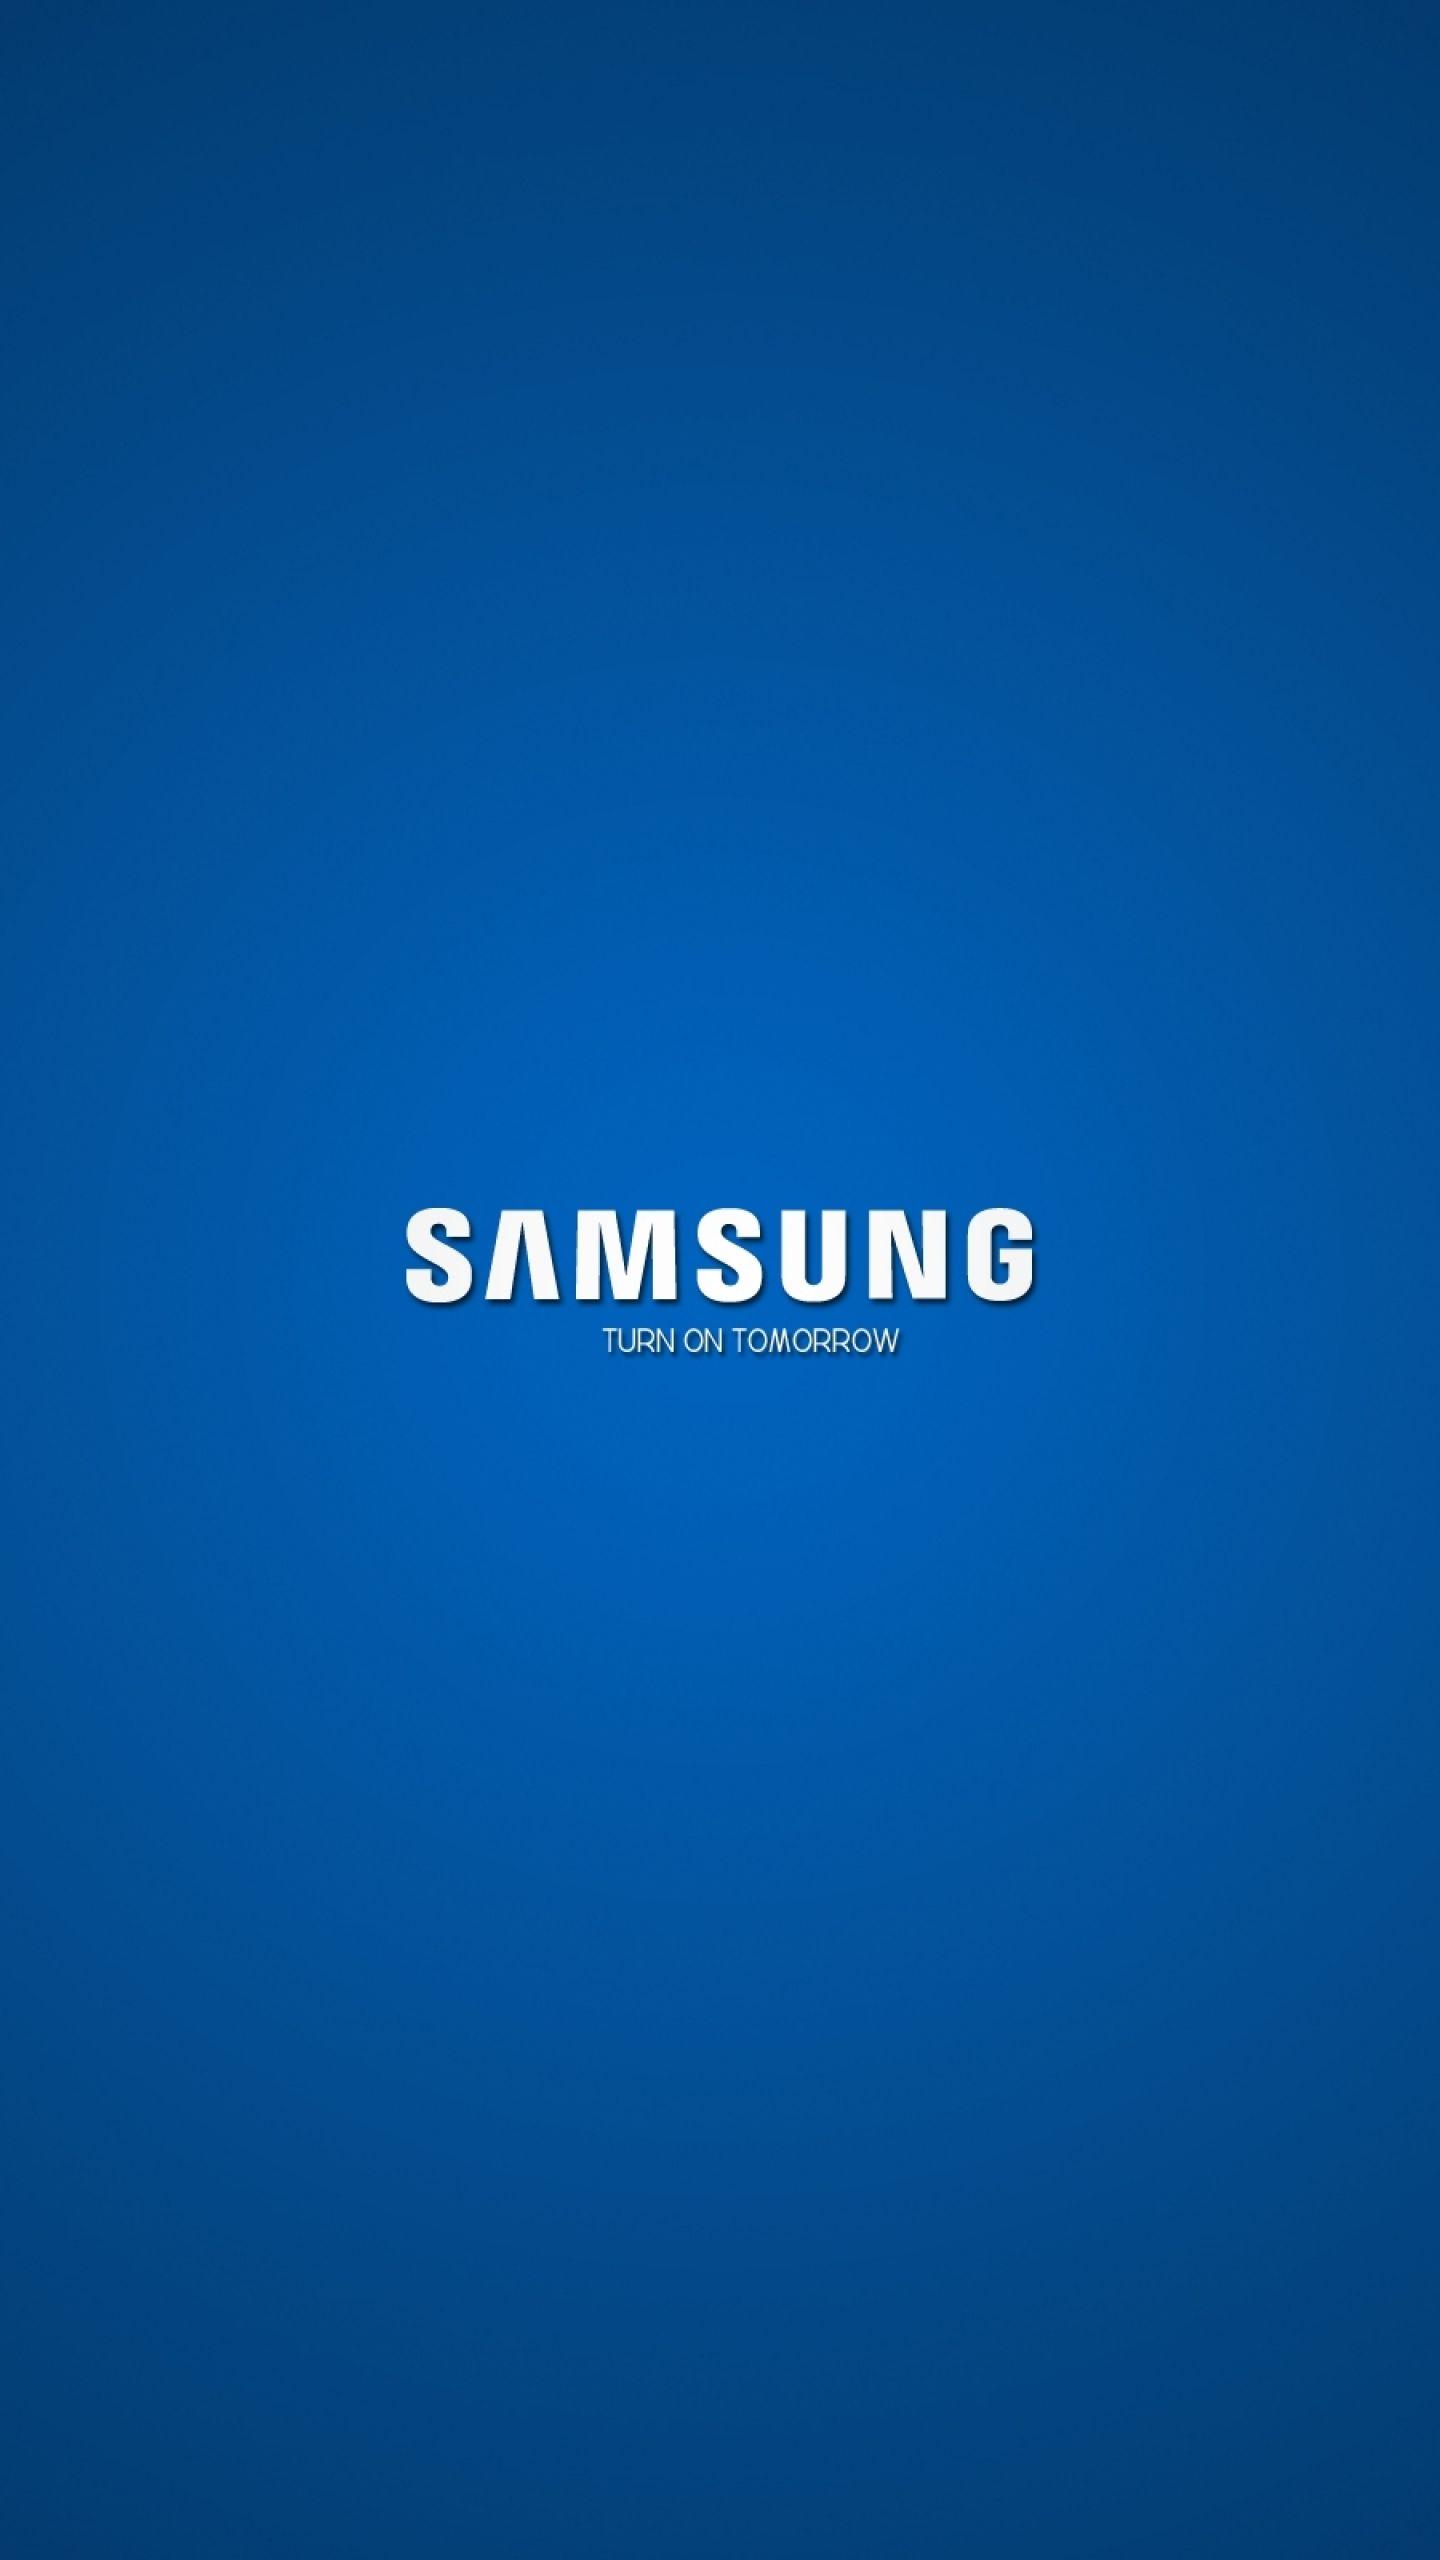 QHD Samsung Galaxy S6, S7, Edge, Note, LG G4 Company Wallpapers HD